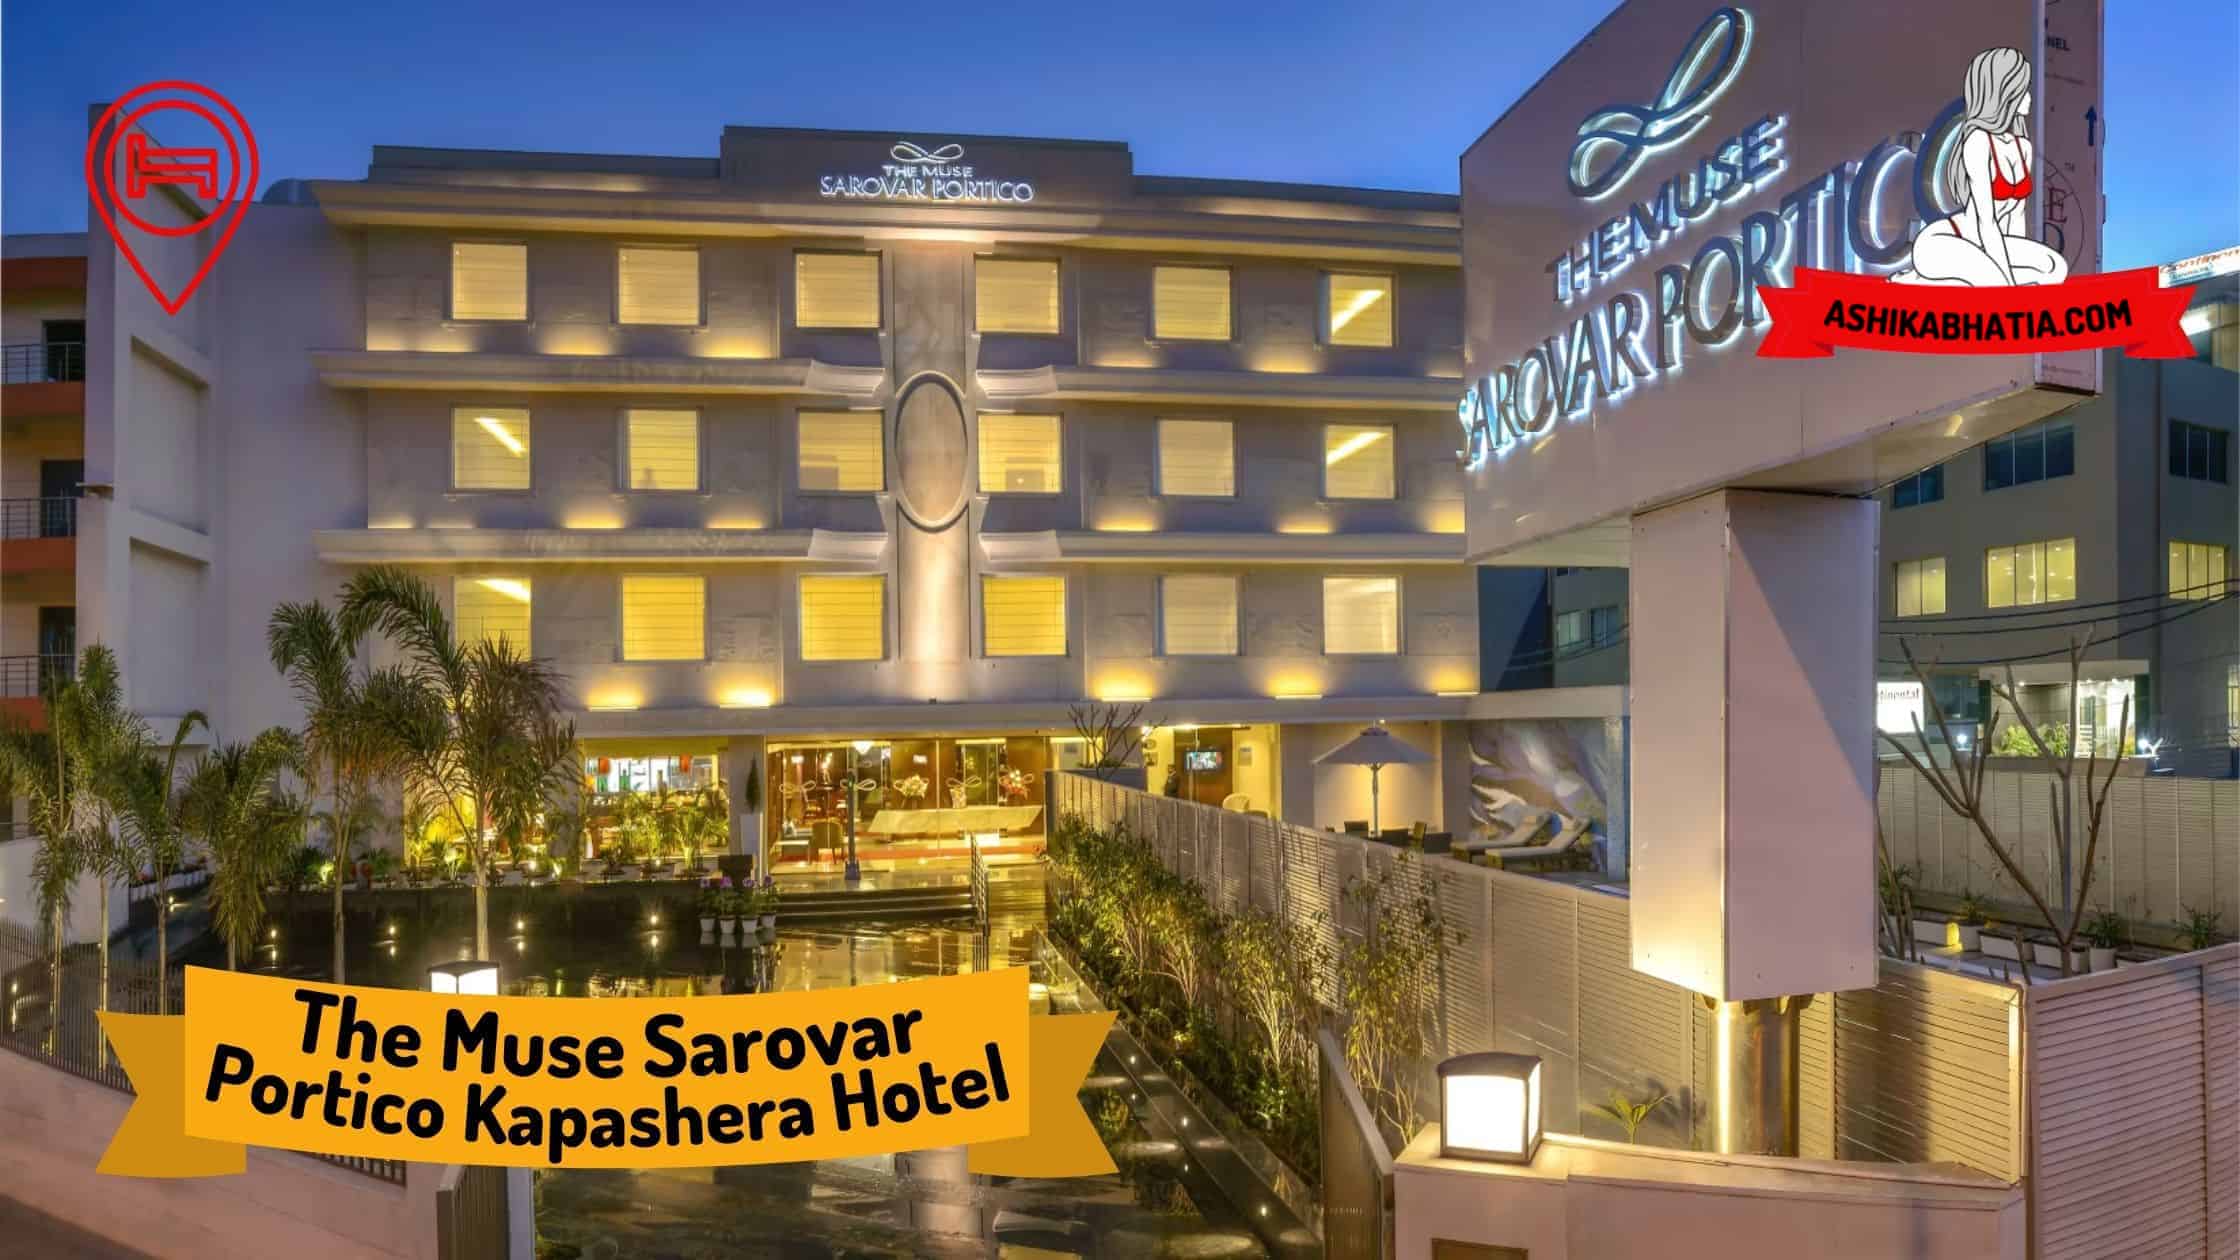 The Muse Sarovar Portico Kapashera Hotel Escorts